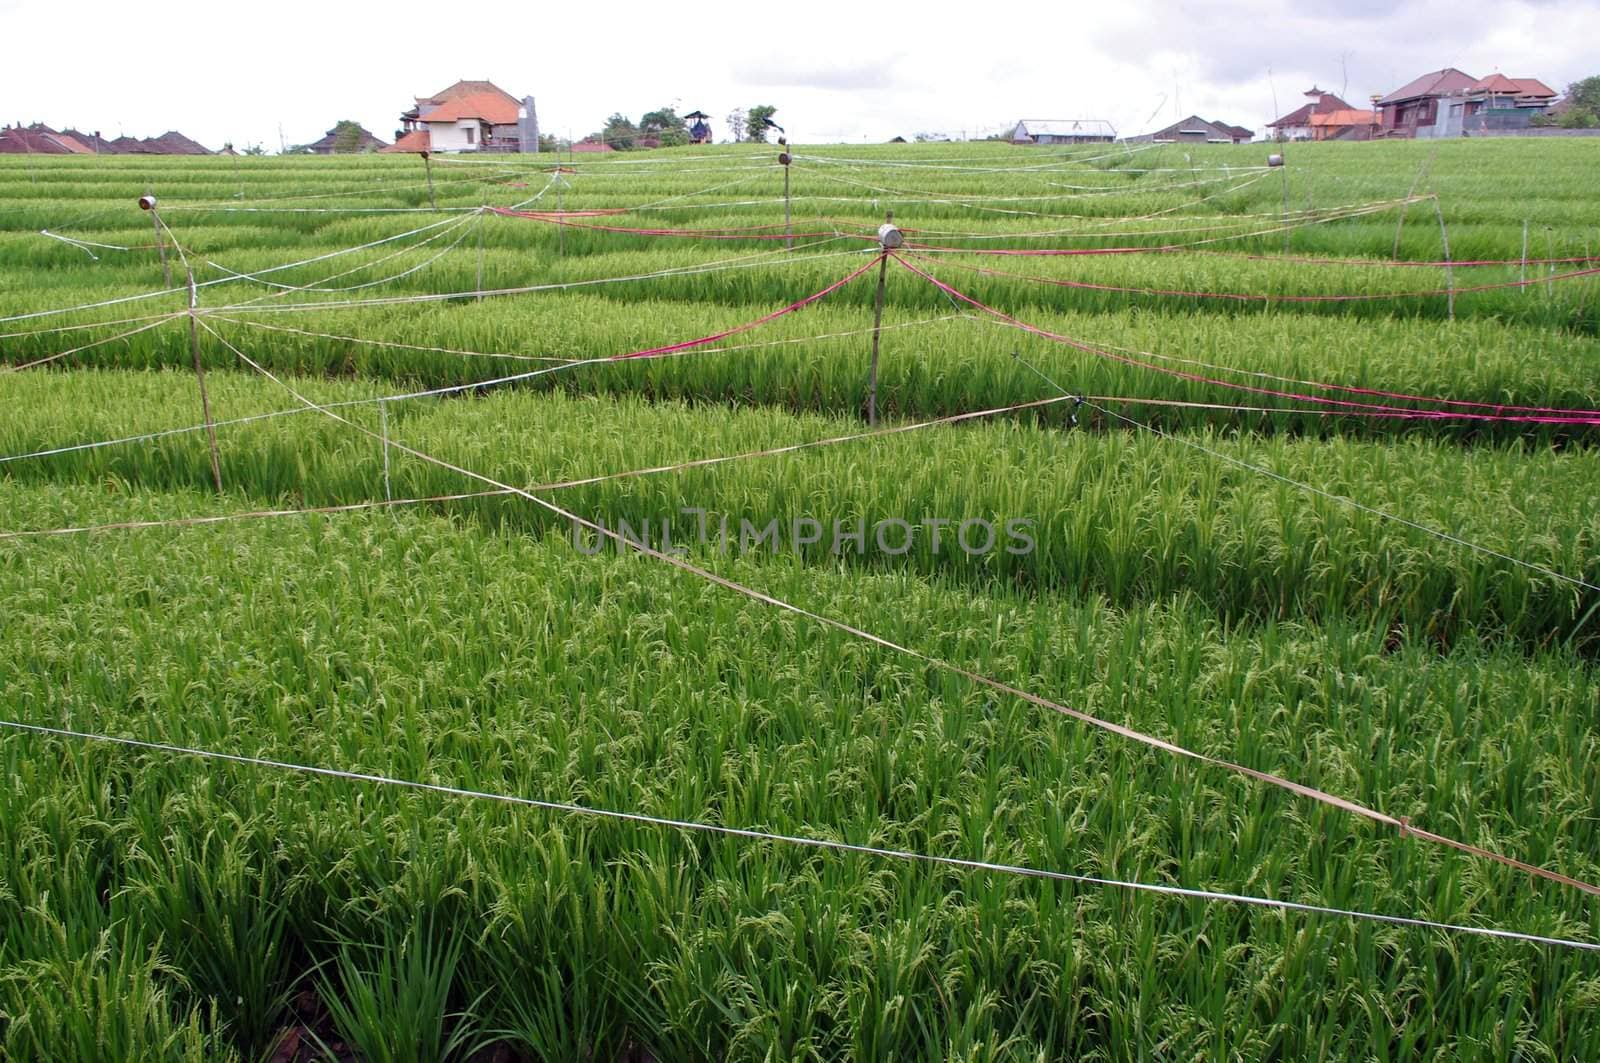 Rice field in a farm, Padang Sambian, Bali, Indonesia.